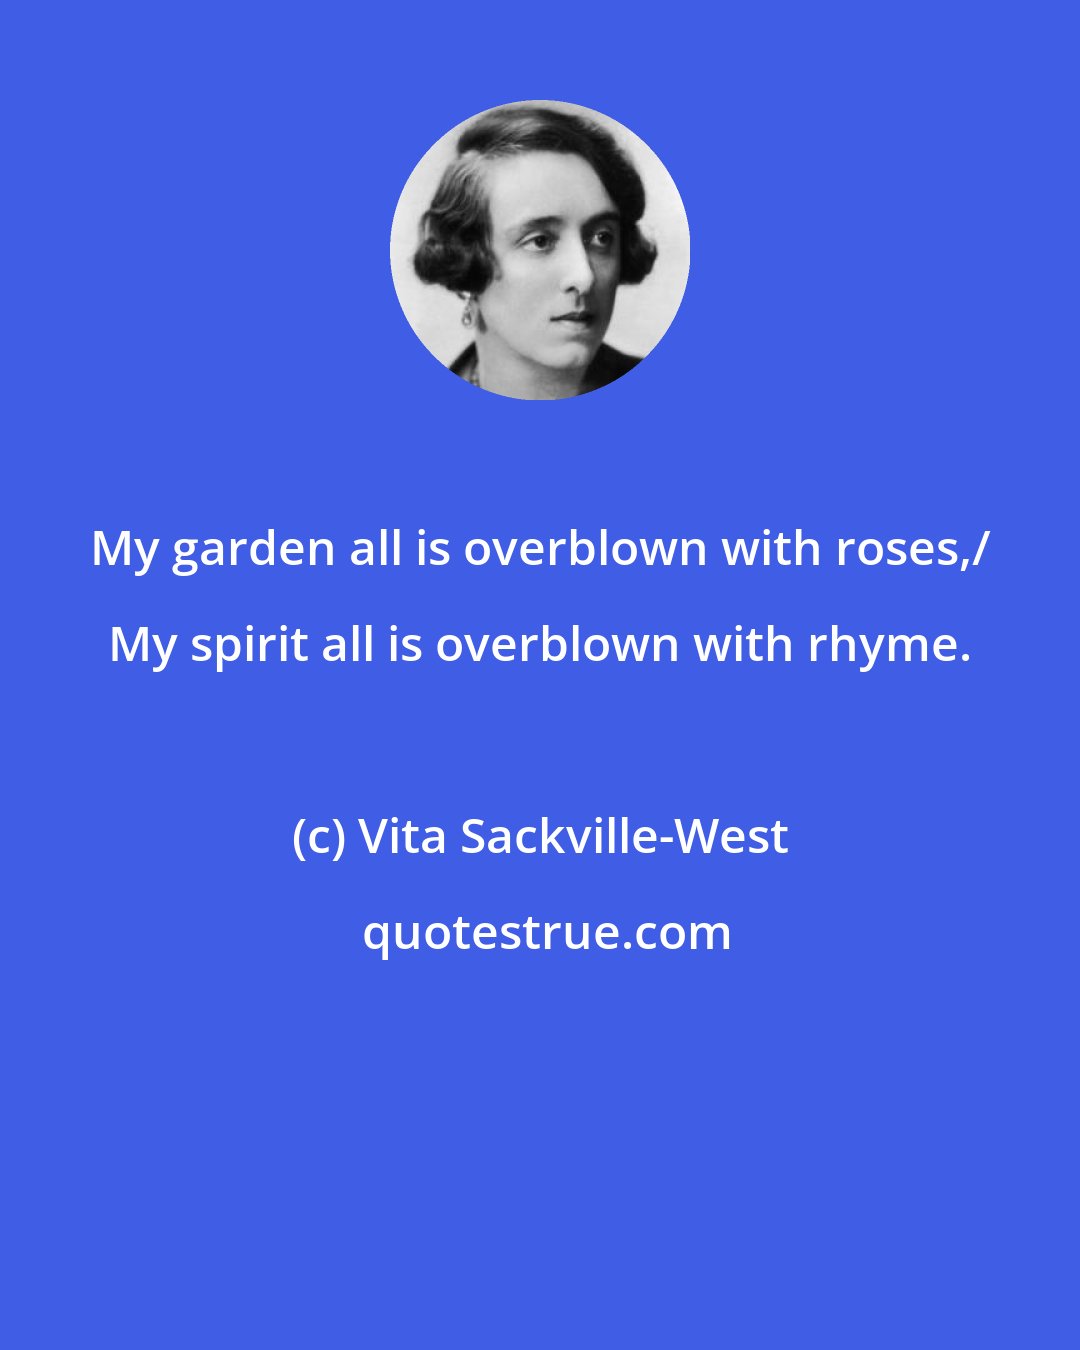 Vita Sackville-West: My garden all is overblown with roses,/ My spirit all is overblown with rhyme.